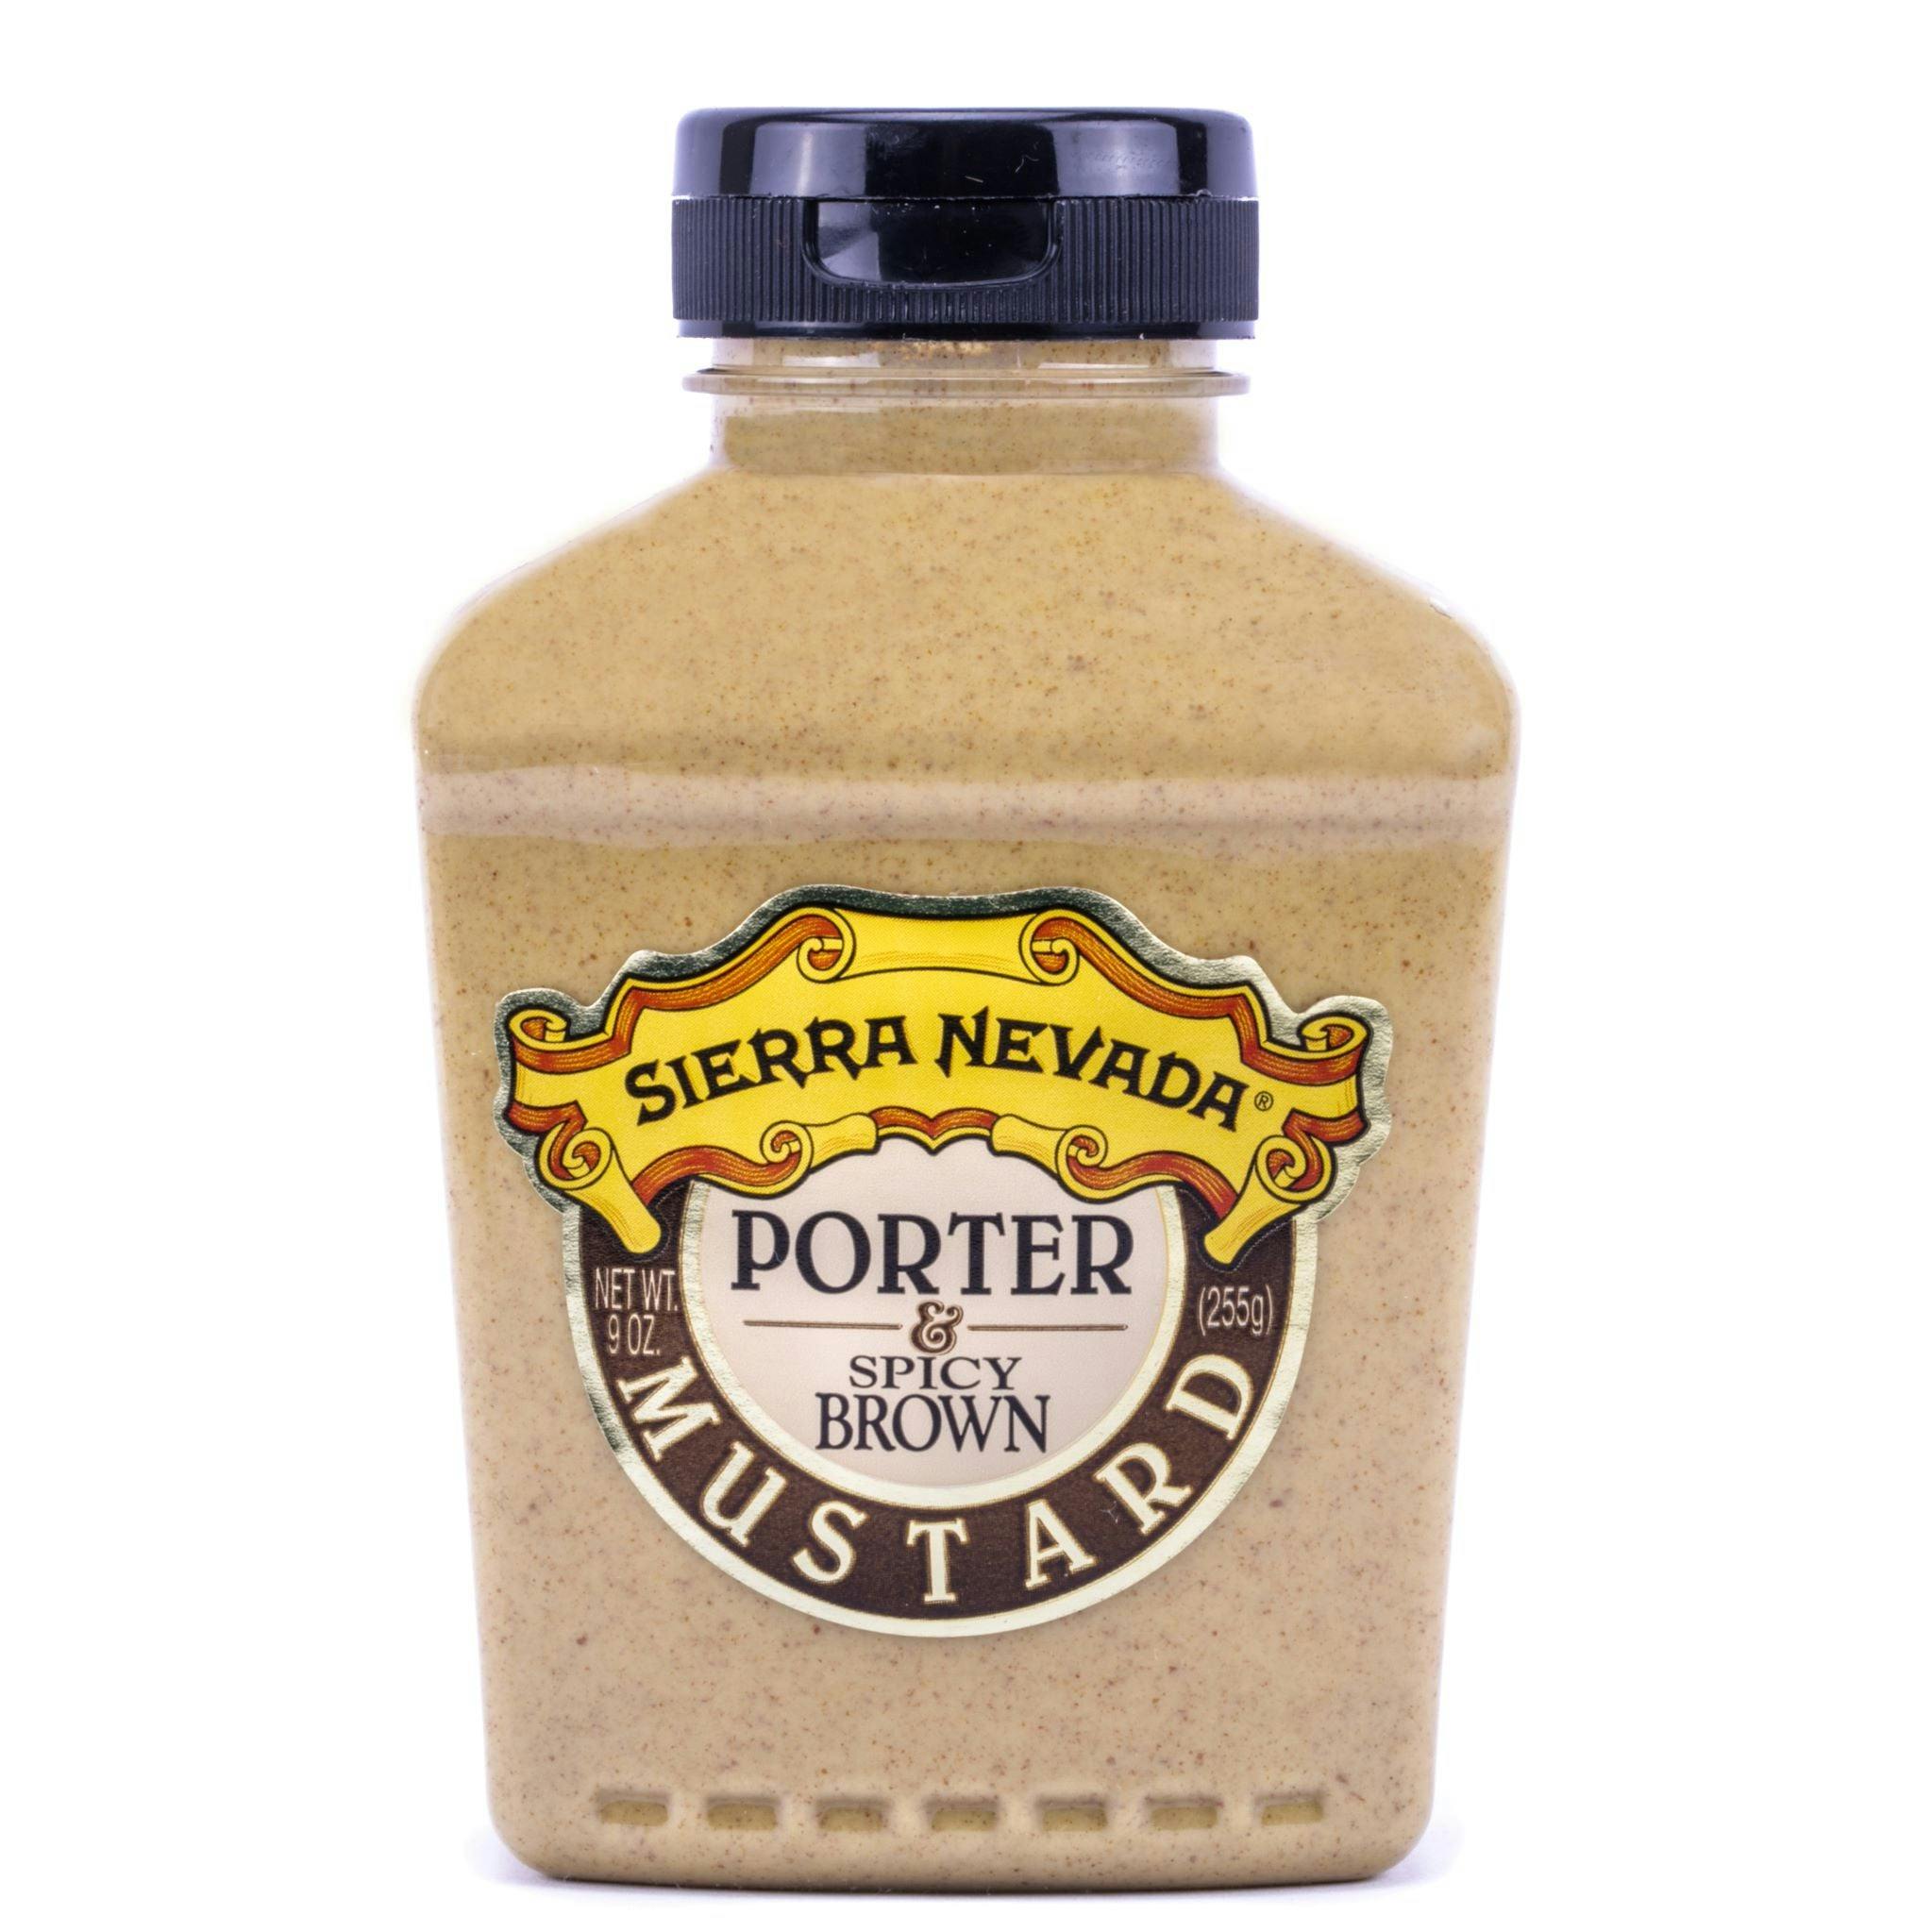 Sierra Nevada porter mustard squeeze bottle